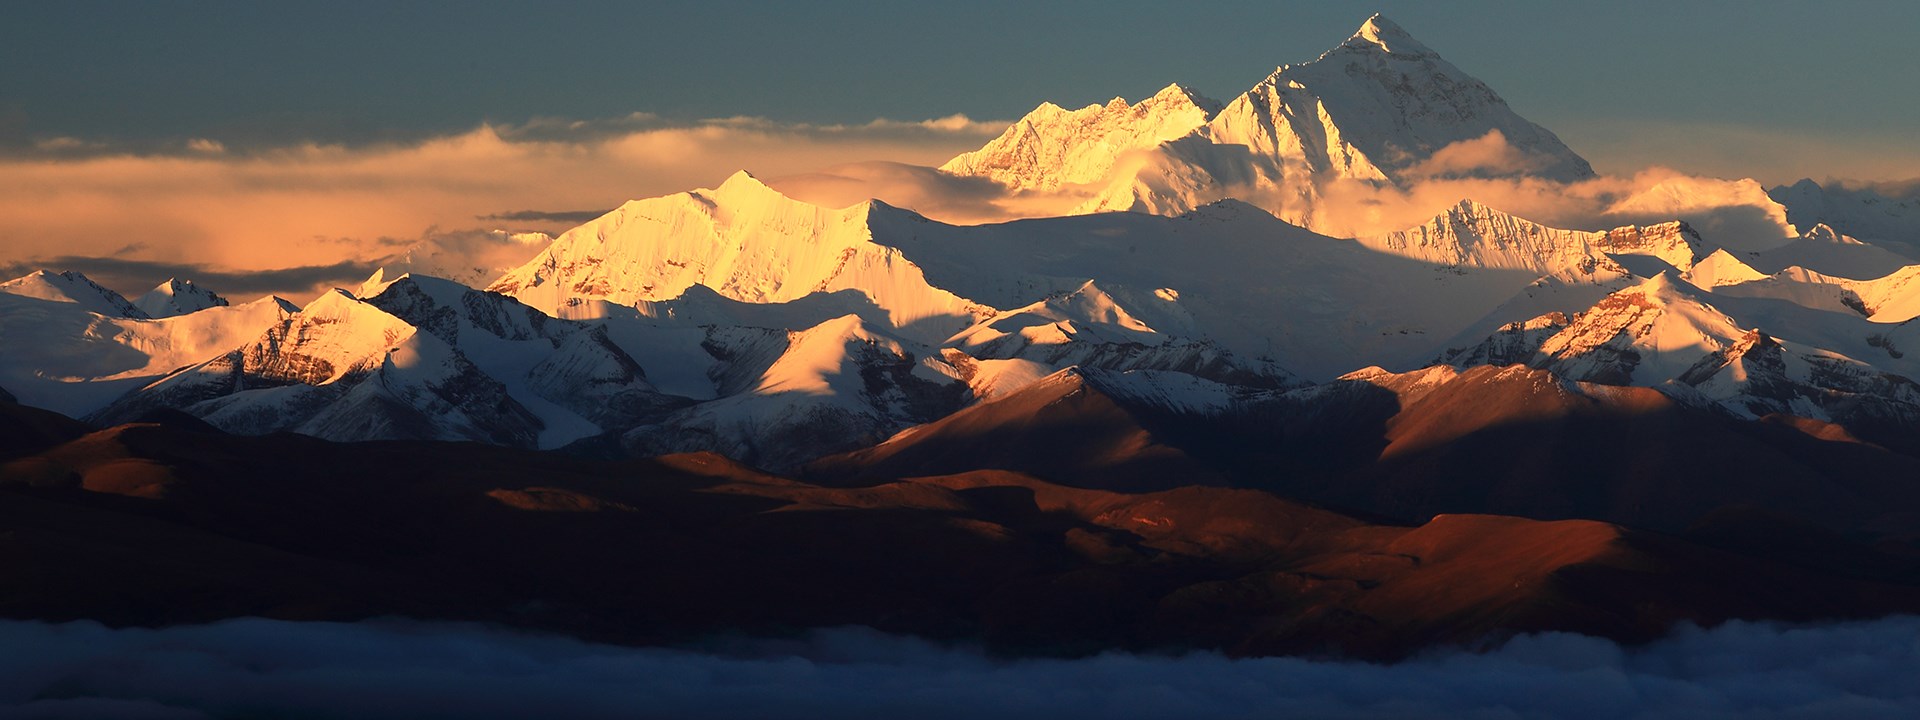 Escursionismo del Tibet dall'Antica Tingri all'Everest